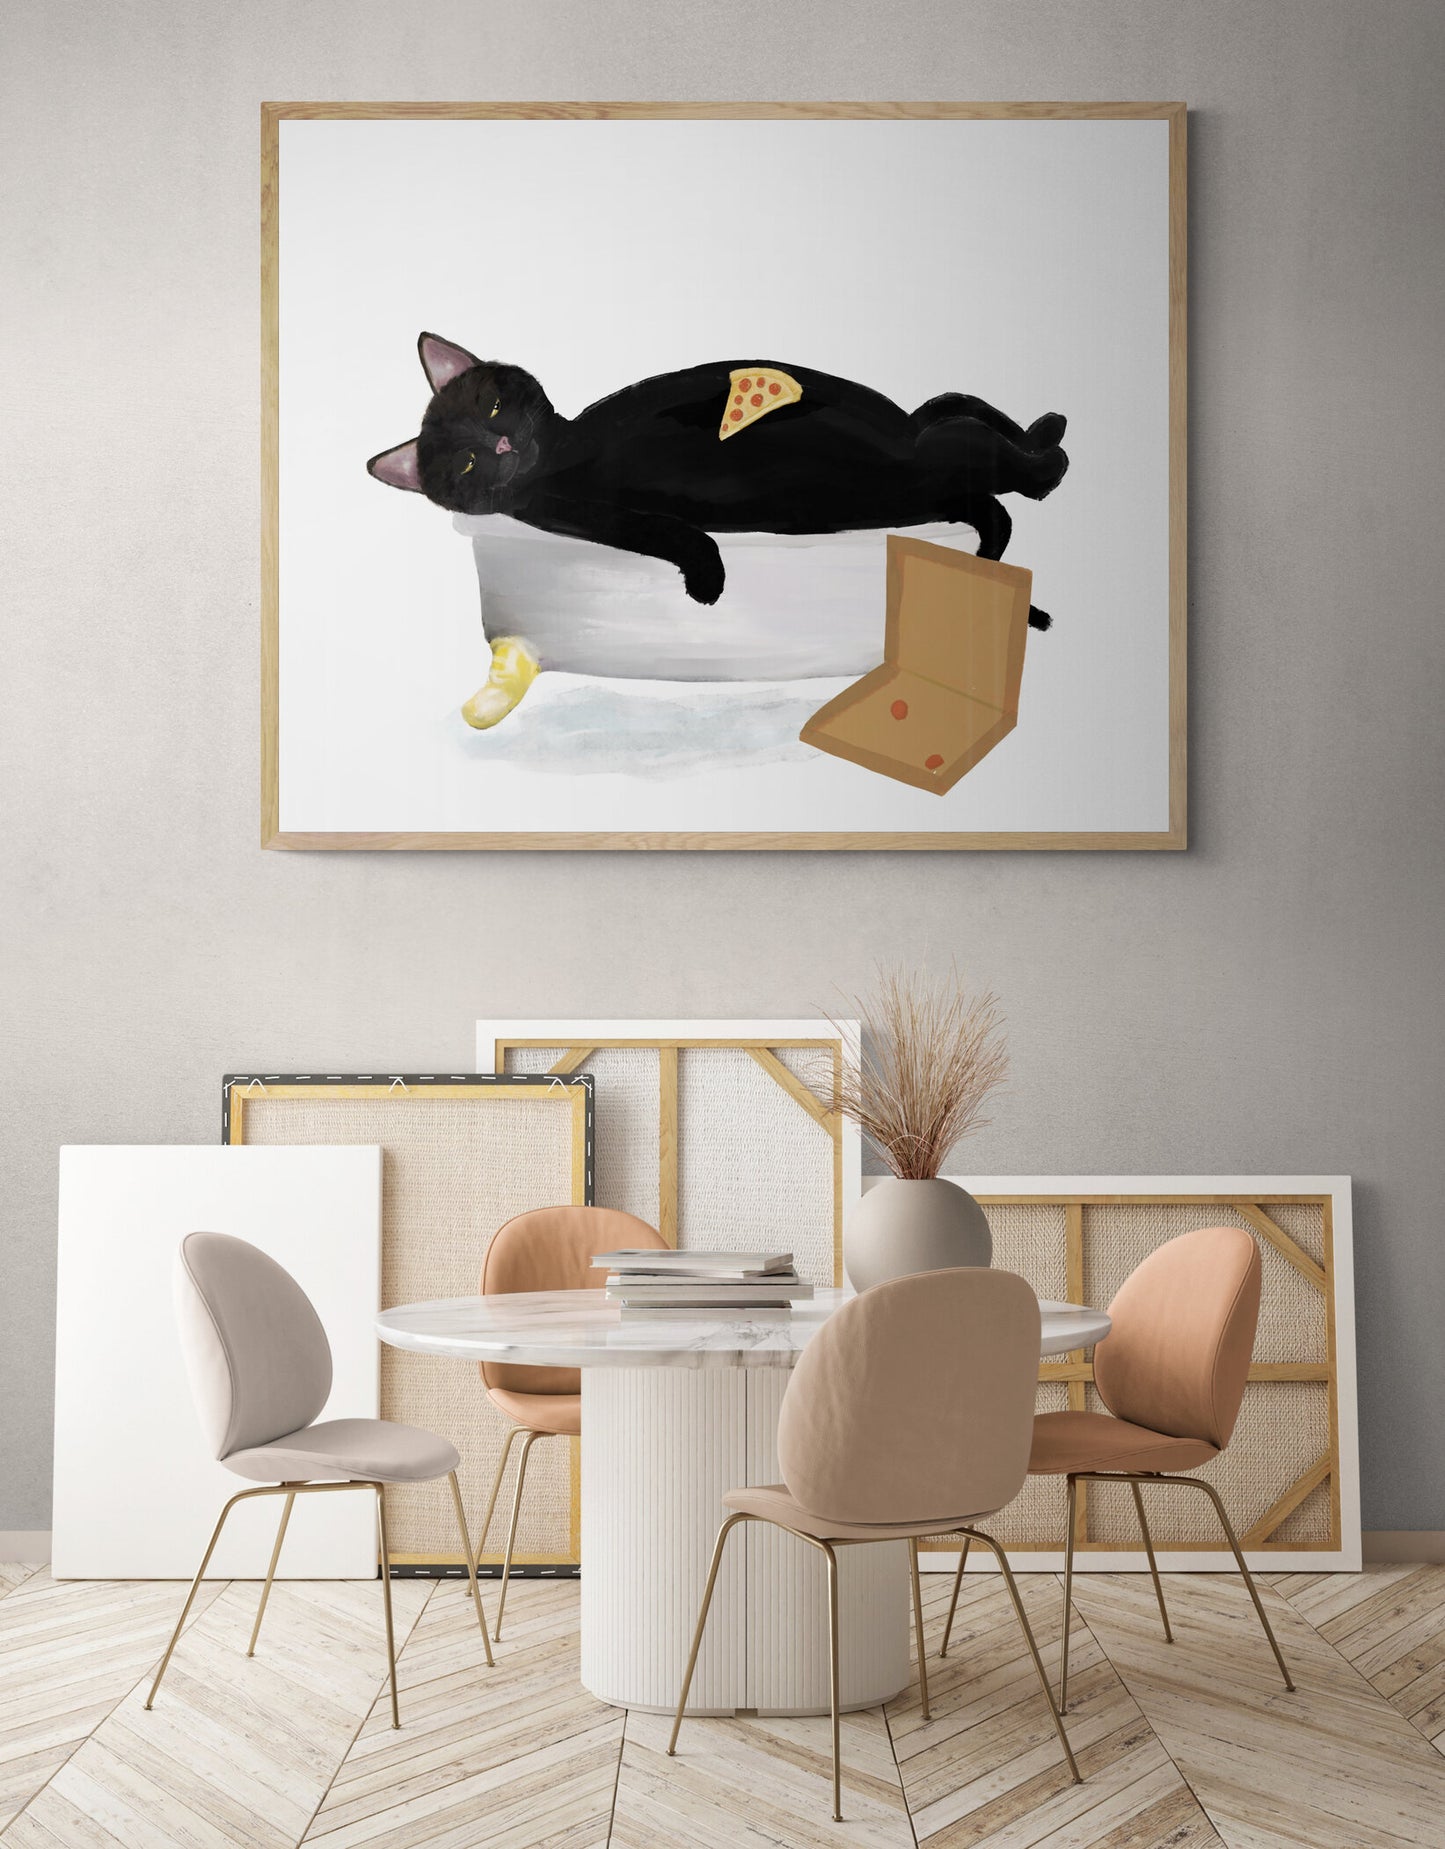 Black Cat Eating Pizza in Tub Print